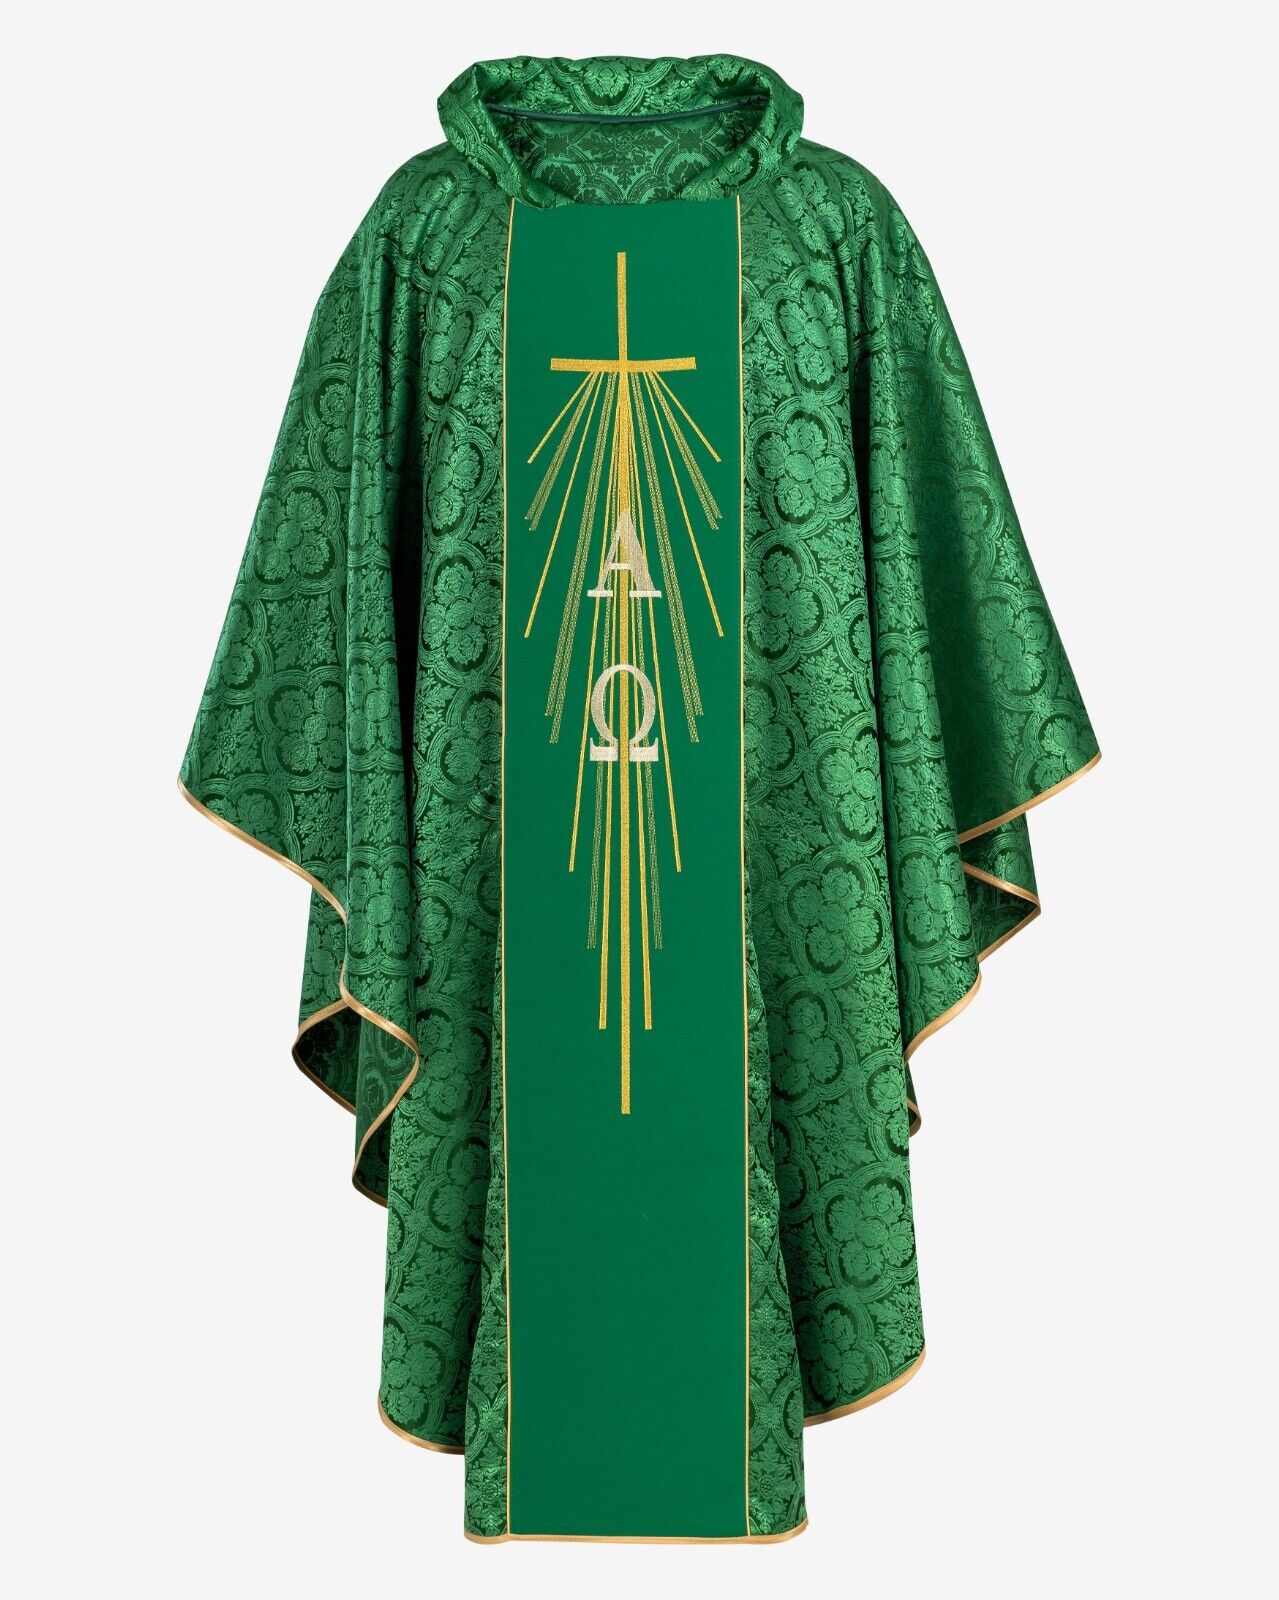 Priest Pastor Chasuble Vestment Embroidered ALPHA & OMEGA Design